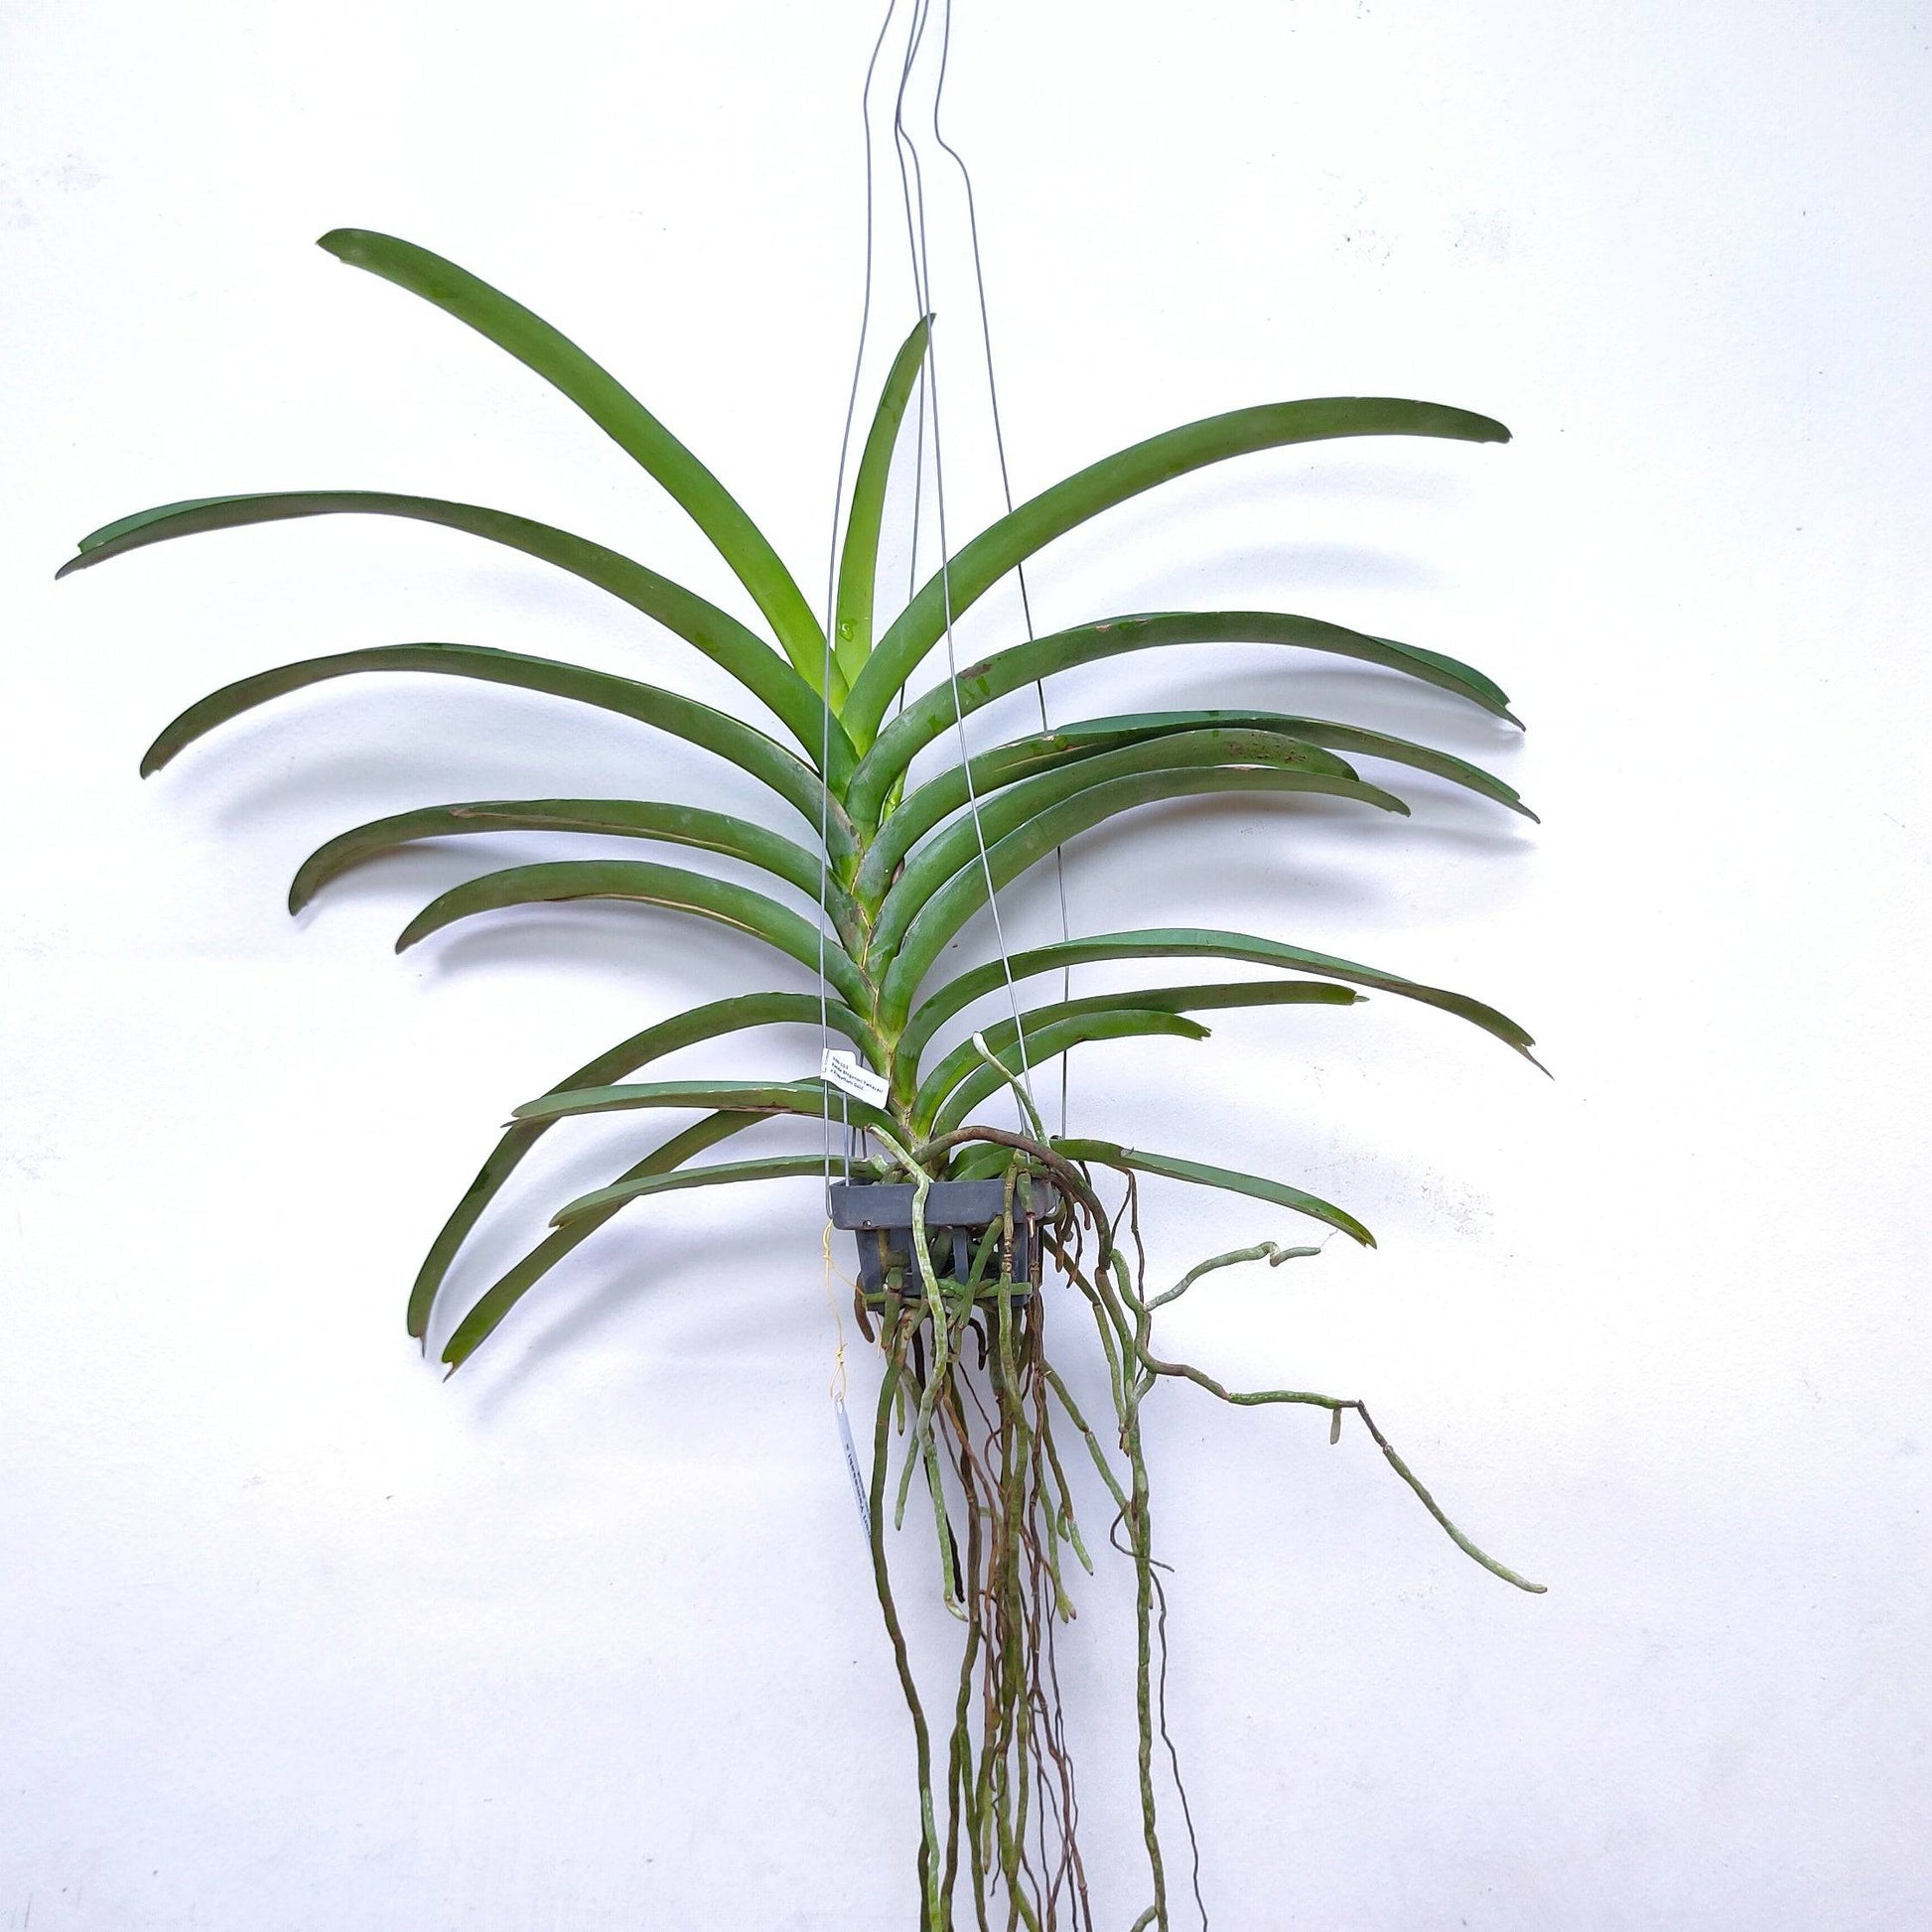 Vanda Shigenori Yamazaki x Prapattom Gold - With Small Spike | FF - Buy Orchids Plants Online by Orchid-Tree.com